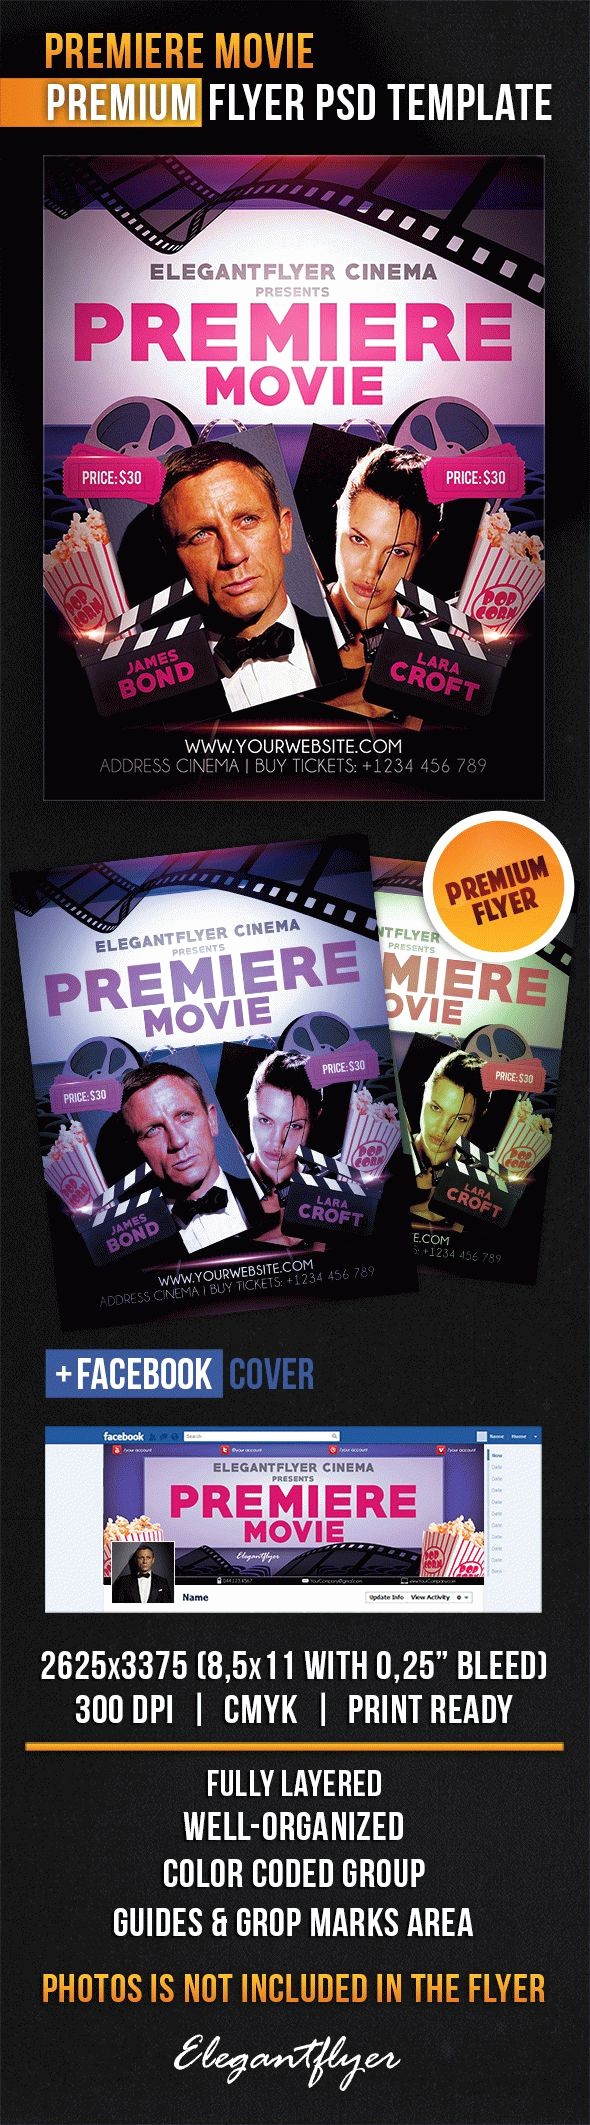 Movie Premiere Invitation Template Free Best Of Premiere Movie – Flyer Psd Template – by Elegantflyer